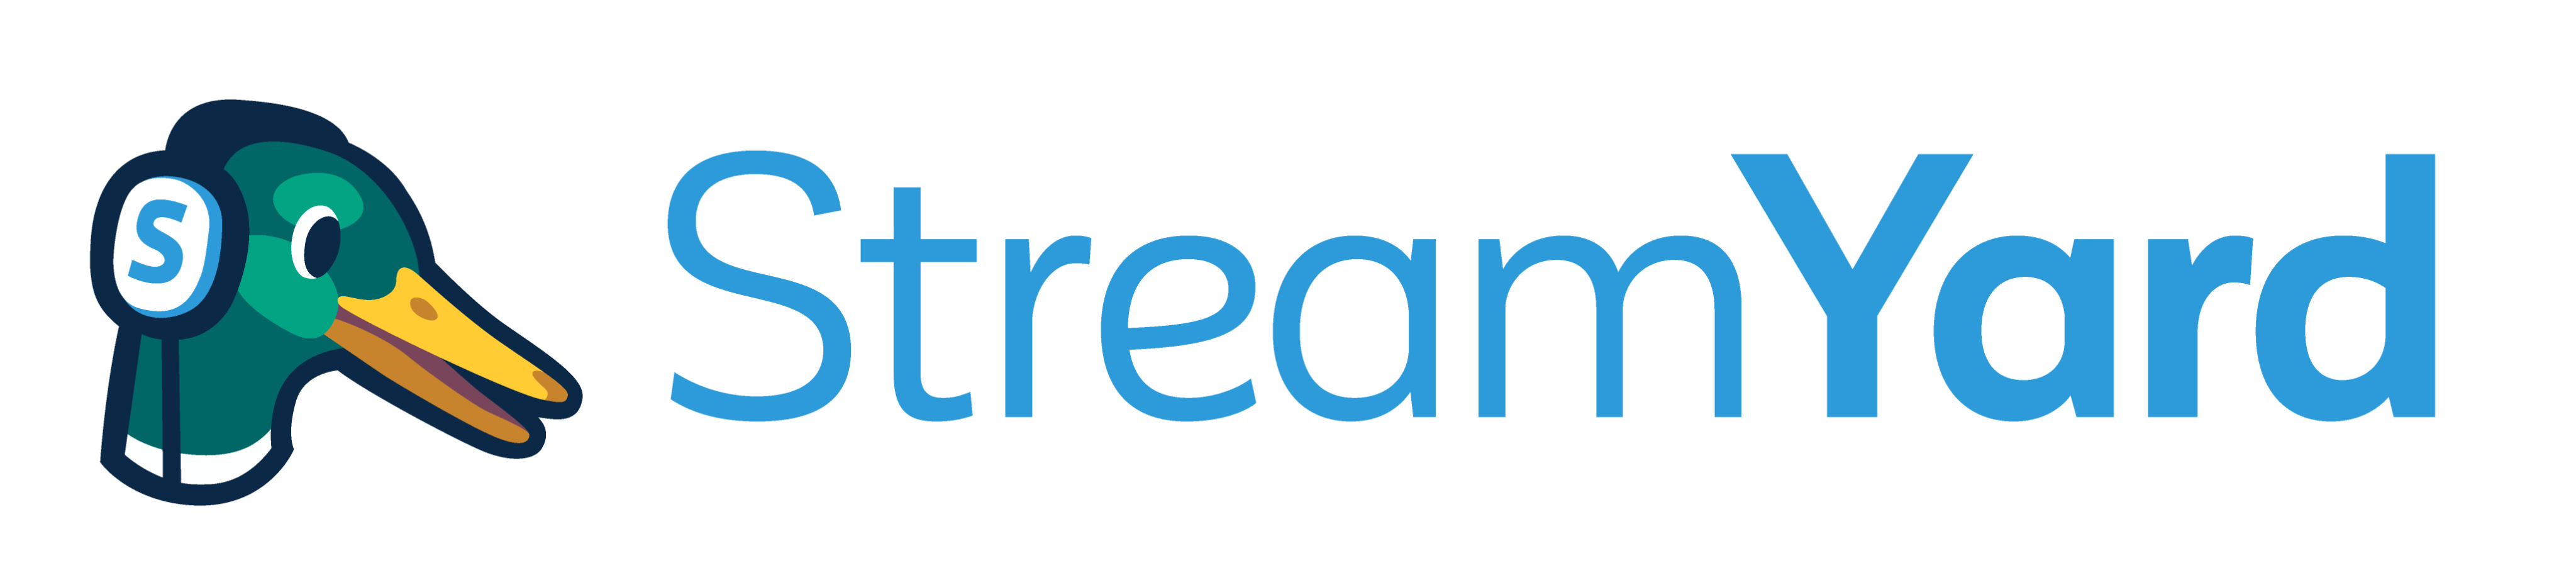 streamyard_logo.png